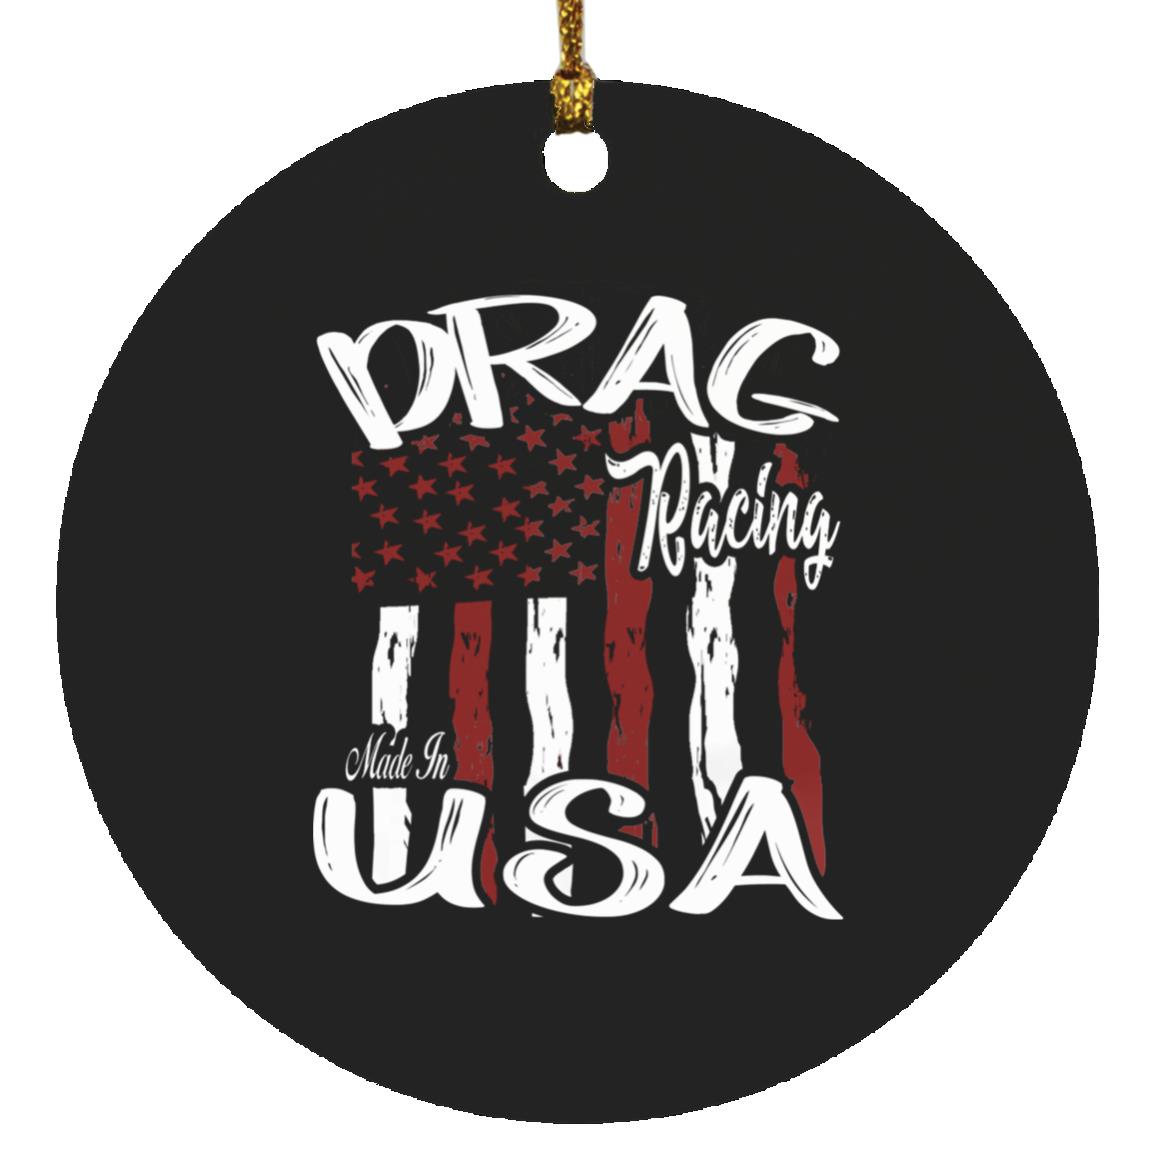 Drag Racing Made In USA Circle Ornament